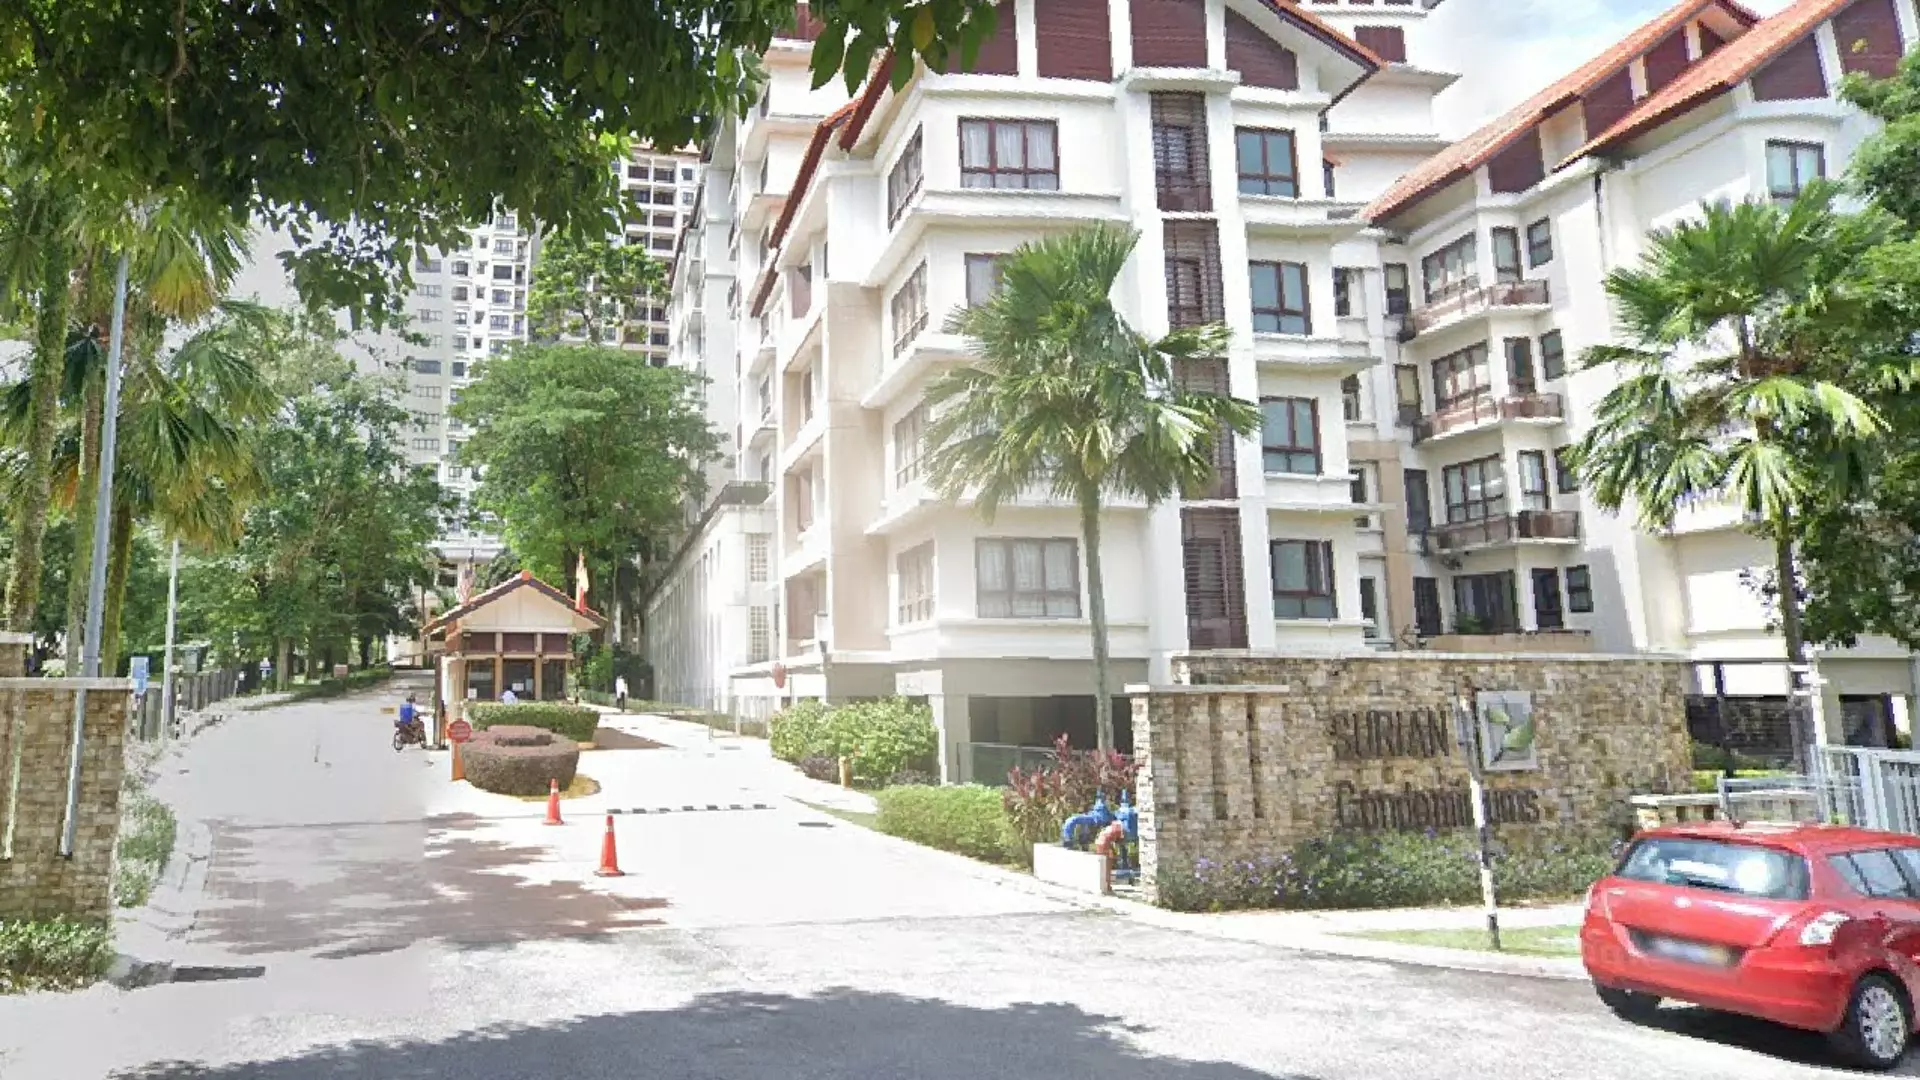 Condominium @ Surian Condominium, Mutiara Damansara, Petaling Jaya, Selangor for Auction 2